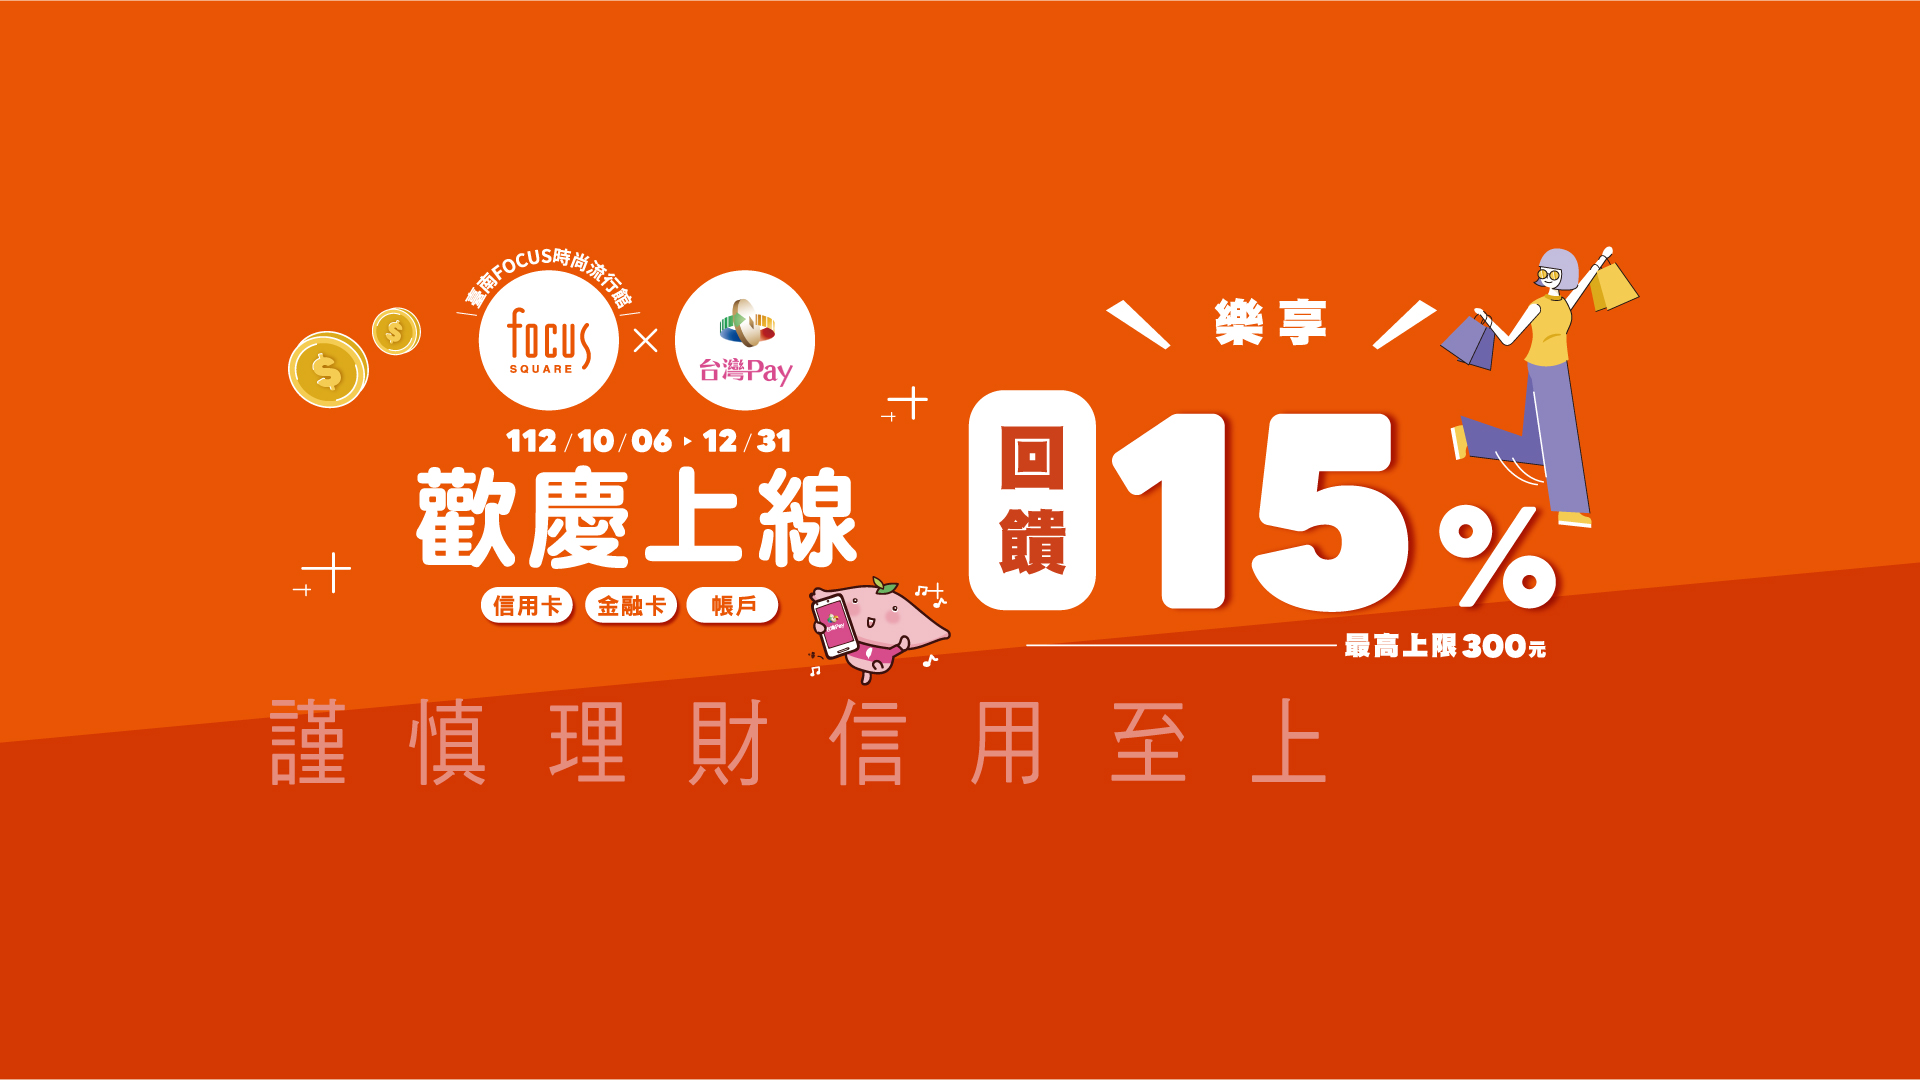 「Focus X 台灣Pay 歡慶上線享回饋15%」BANNER